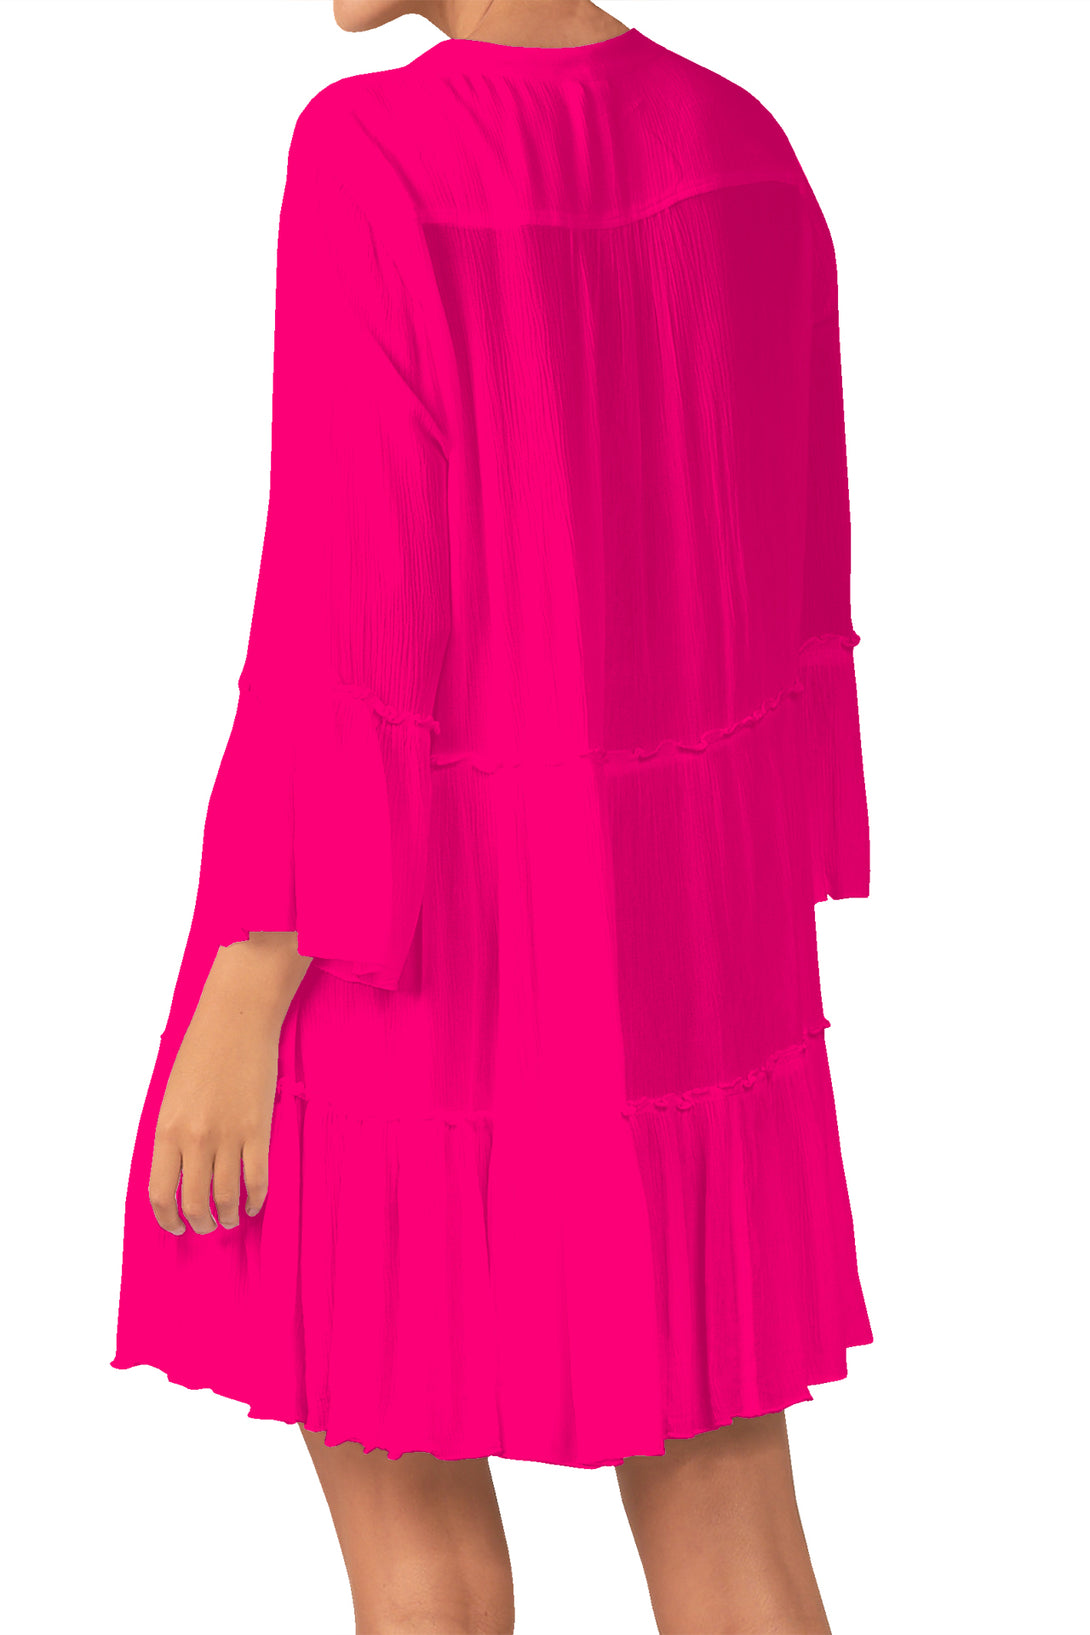  pink mini dress, Shahida Parides, long sleeve short dress, short frock for women party wear,